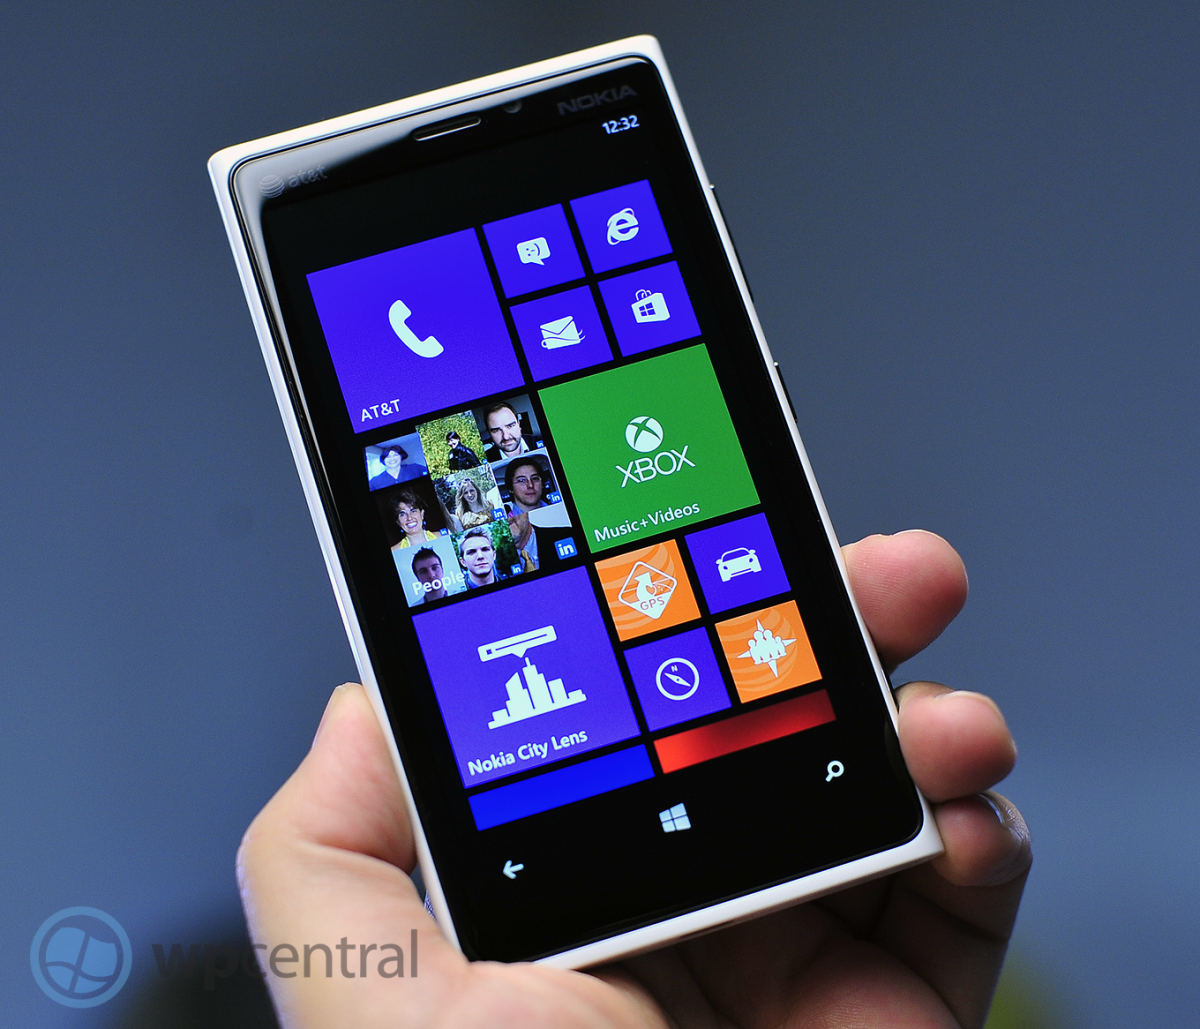 Nokia Lumia 920 Review | Windows Central